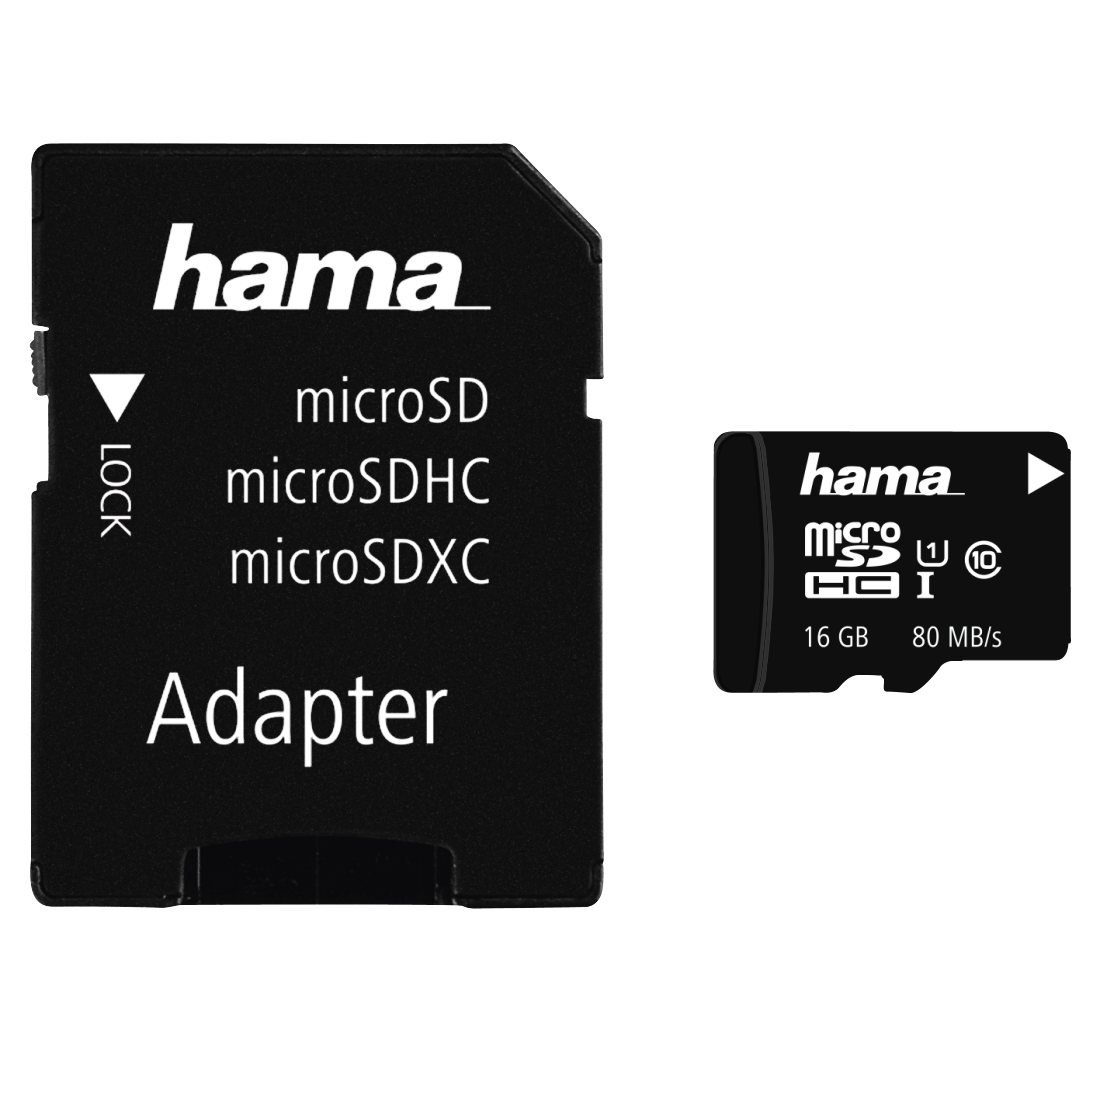 Hama 16GB Class 10 microSDHC, UHS-I 80MBs